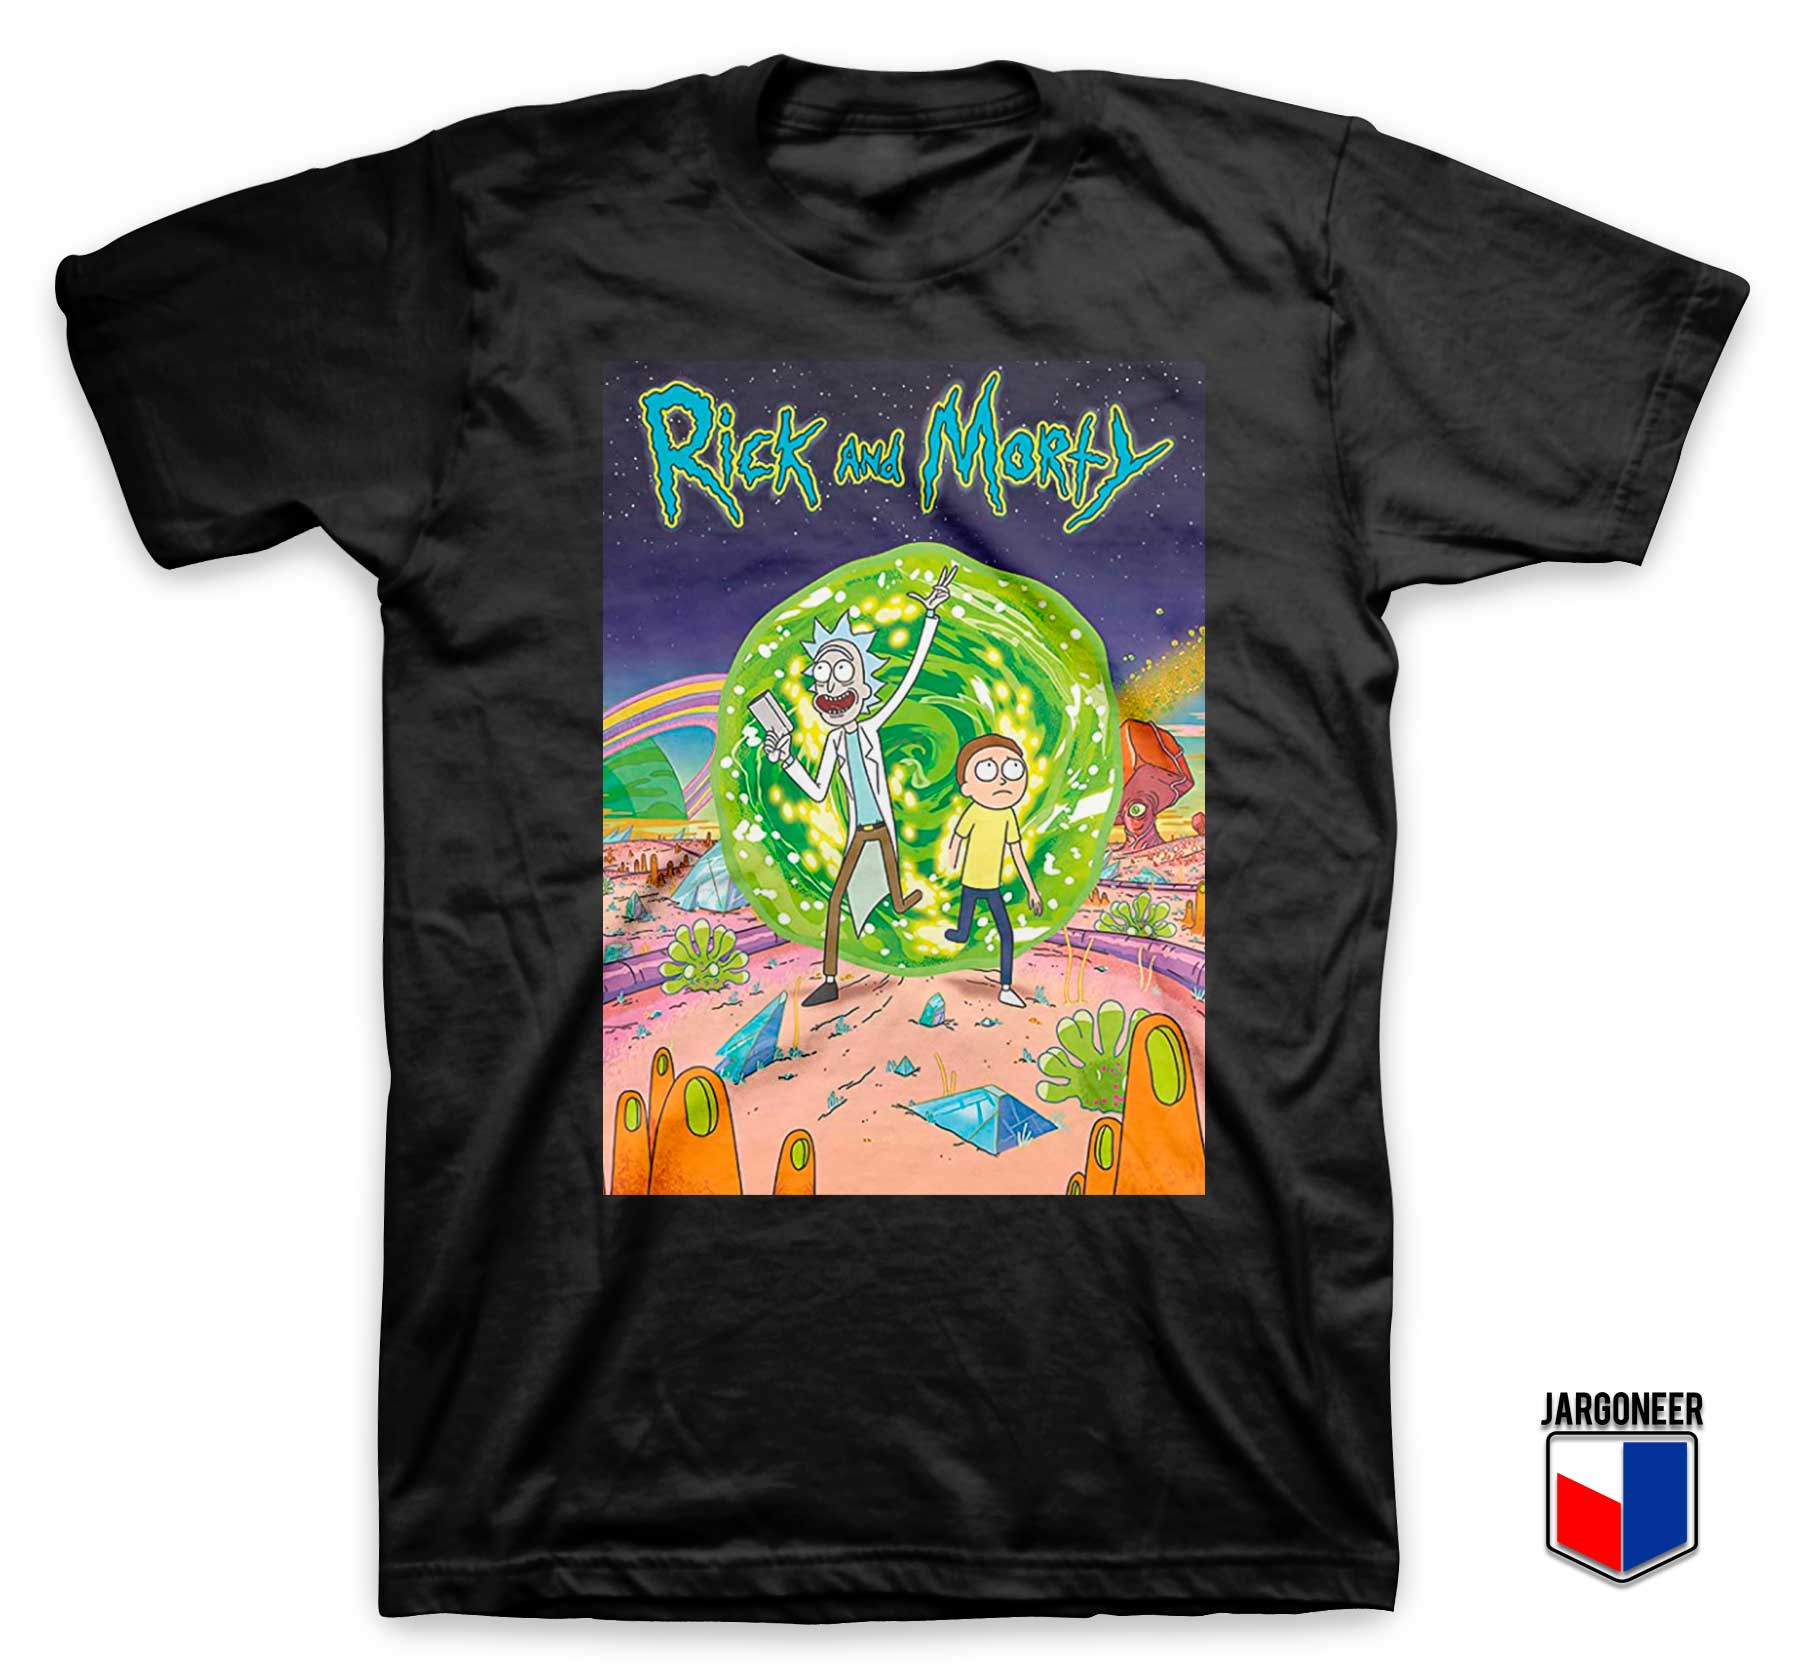 Rick and Morty TV Series T Shirt - Shop Unique Graphic Cool Shirt Designs